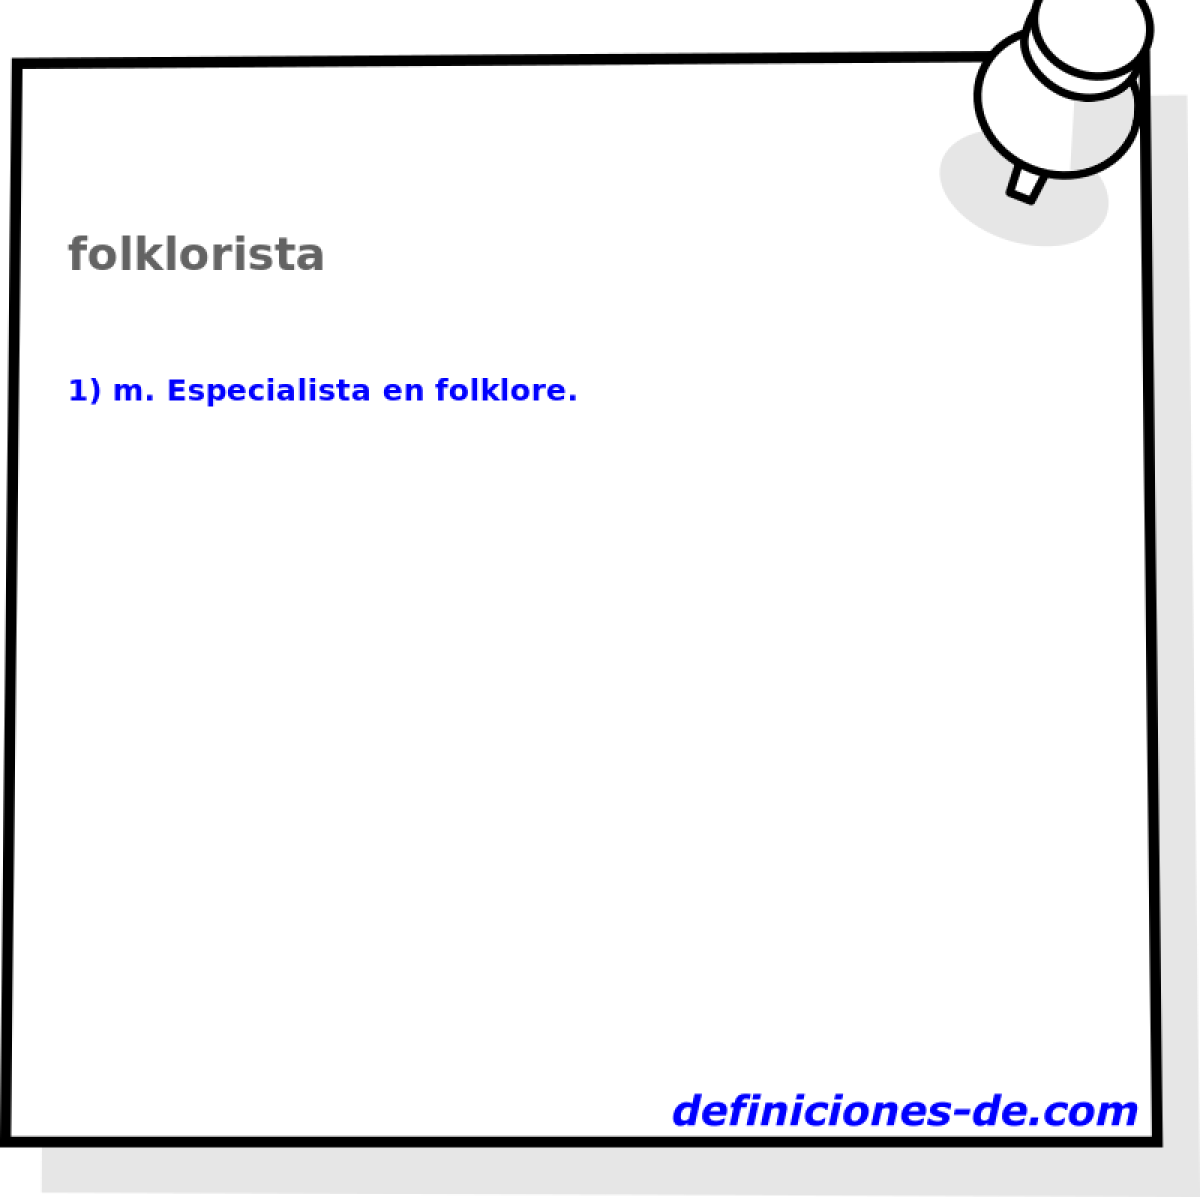 folklorista 